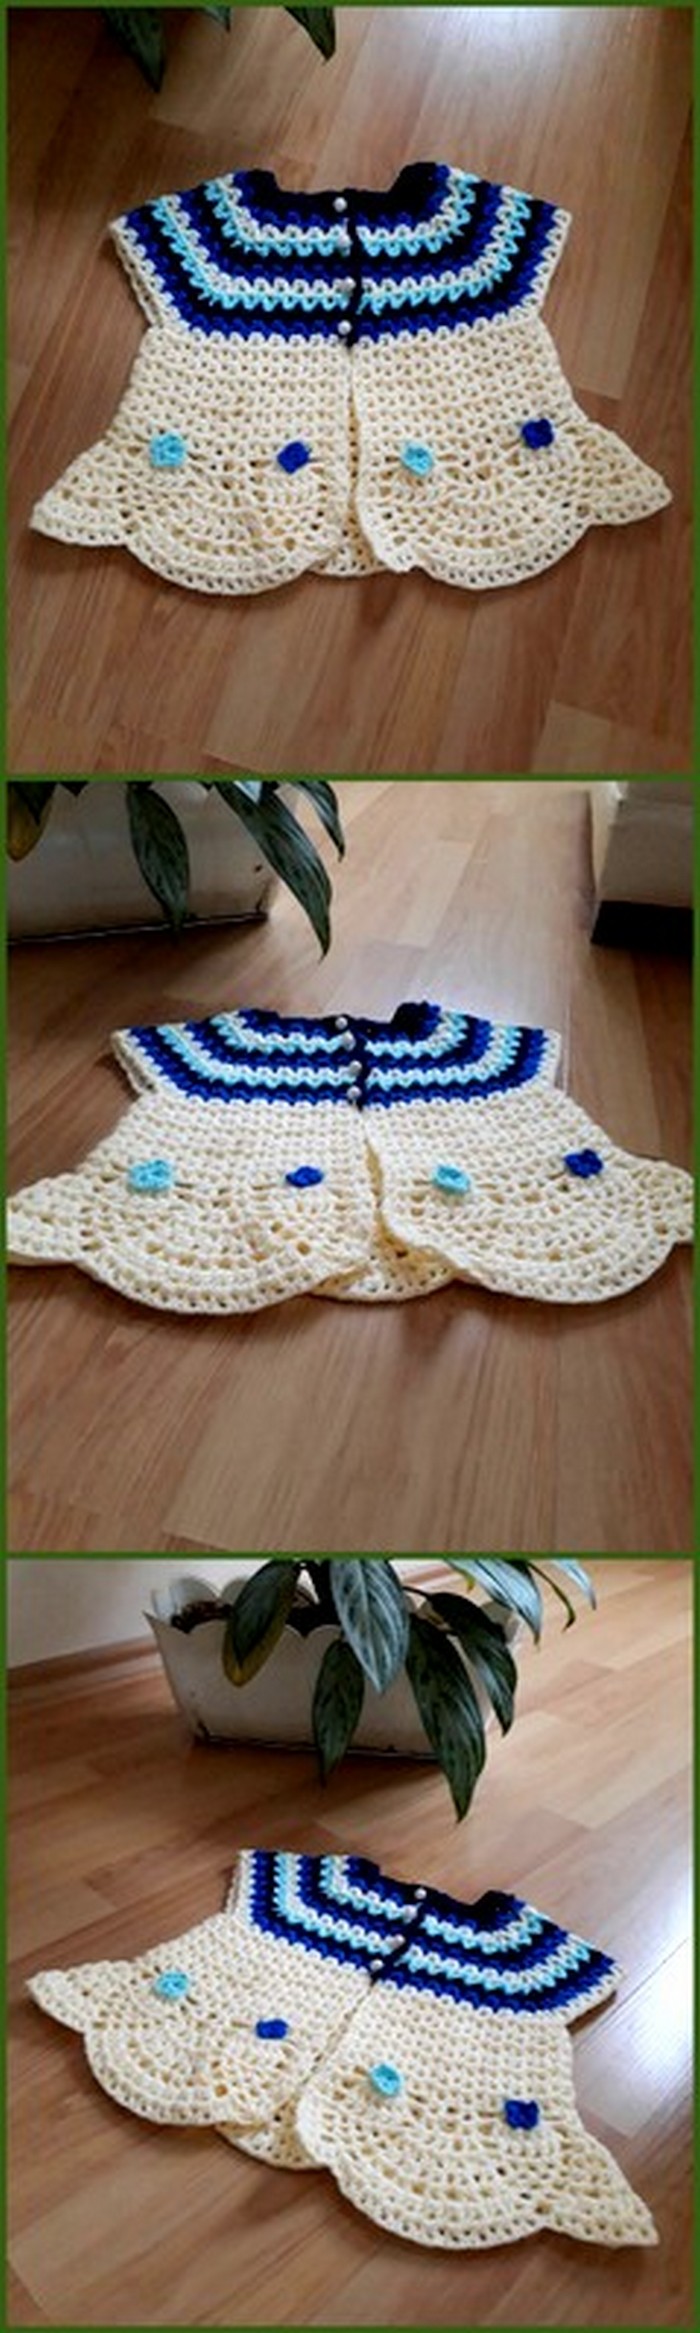 adorable crochet pattern for frock